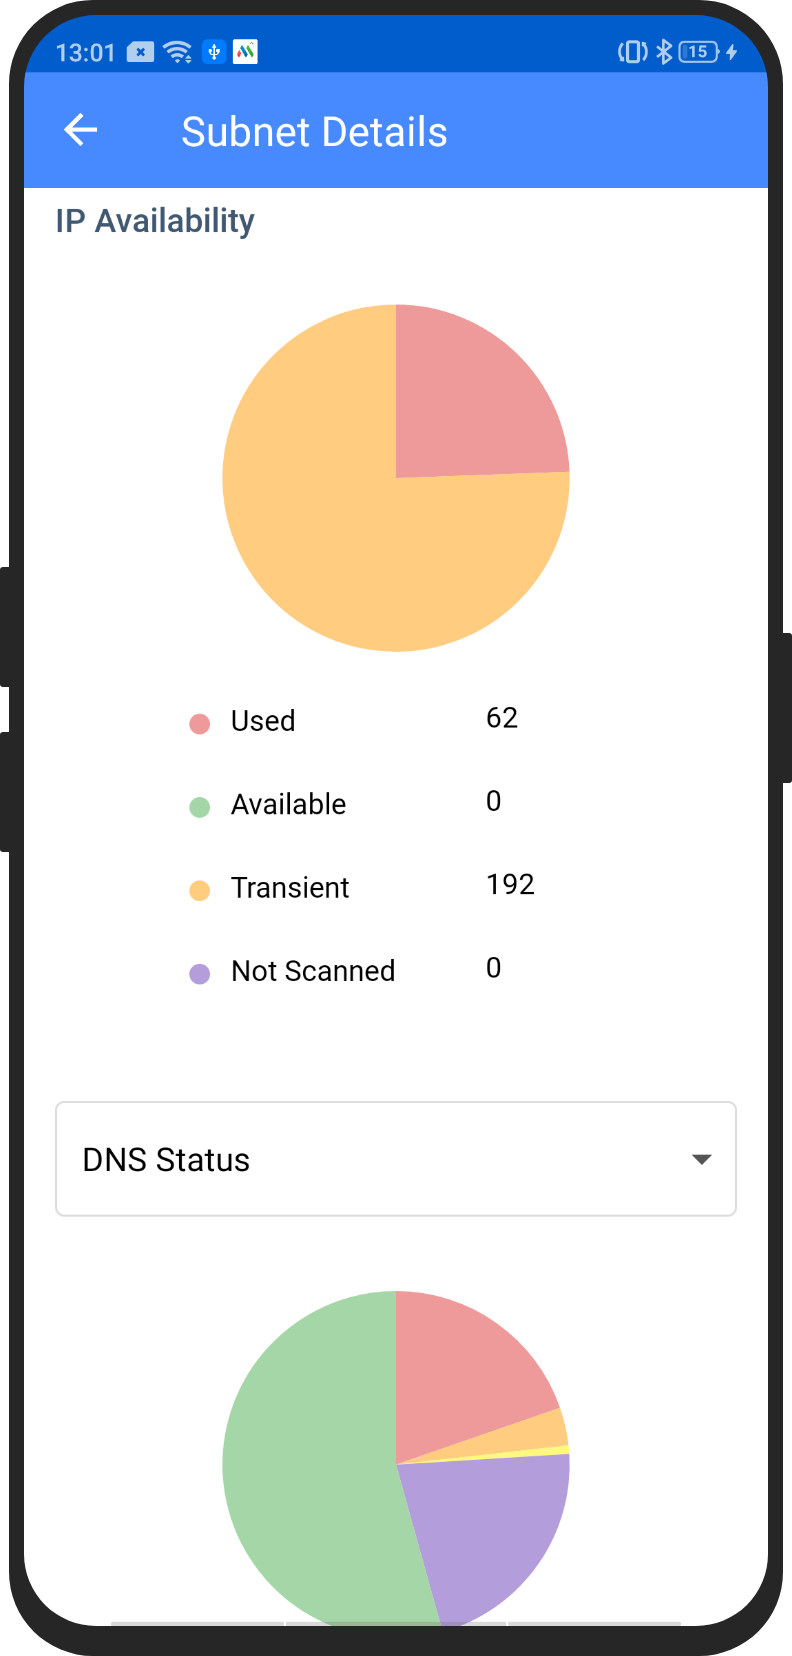 Vista móvil android de la herramienta de detalles de subredes de OpUtils